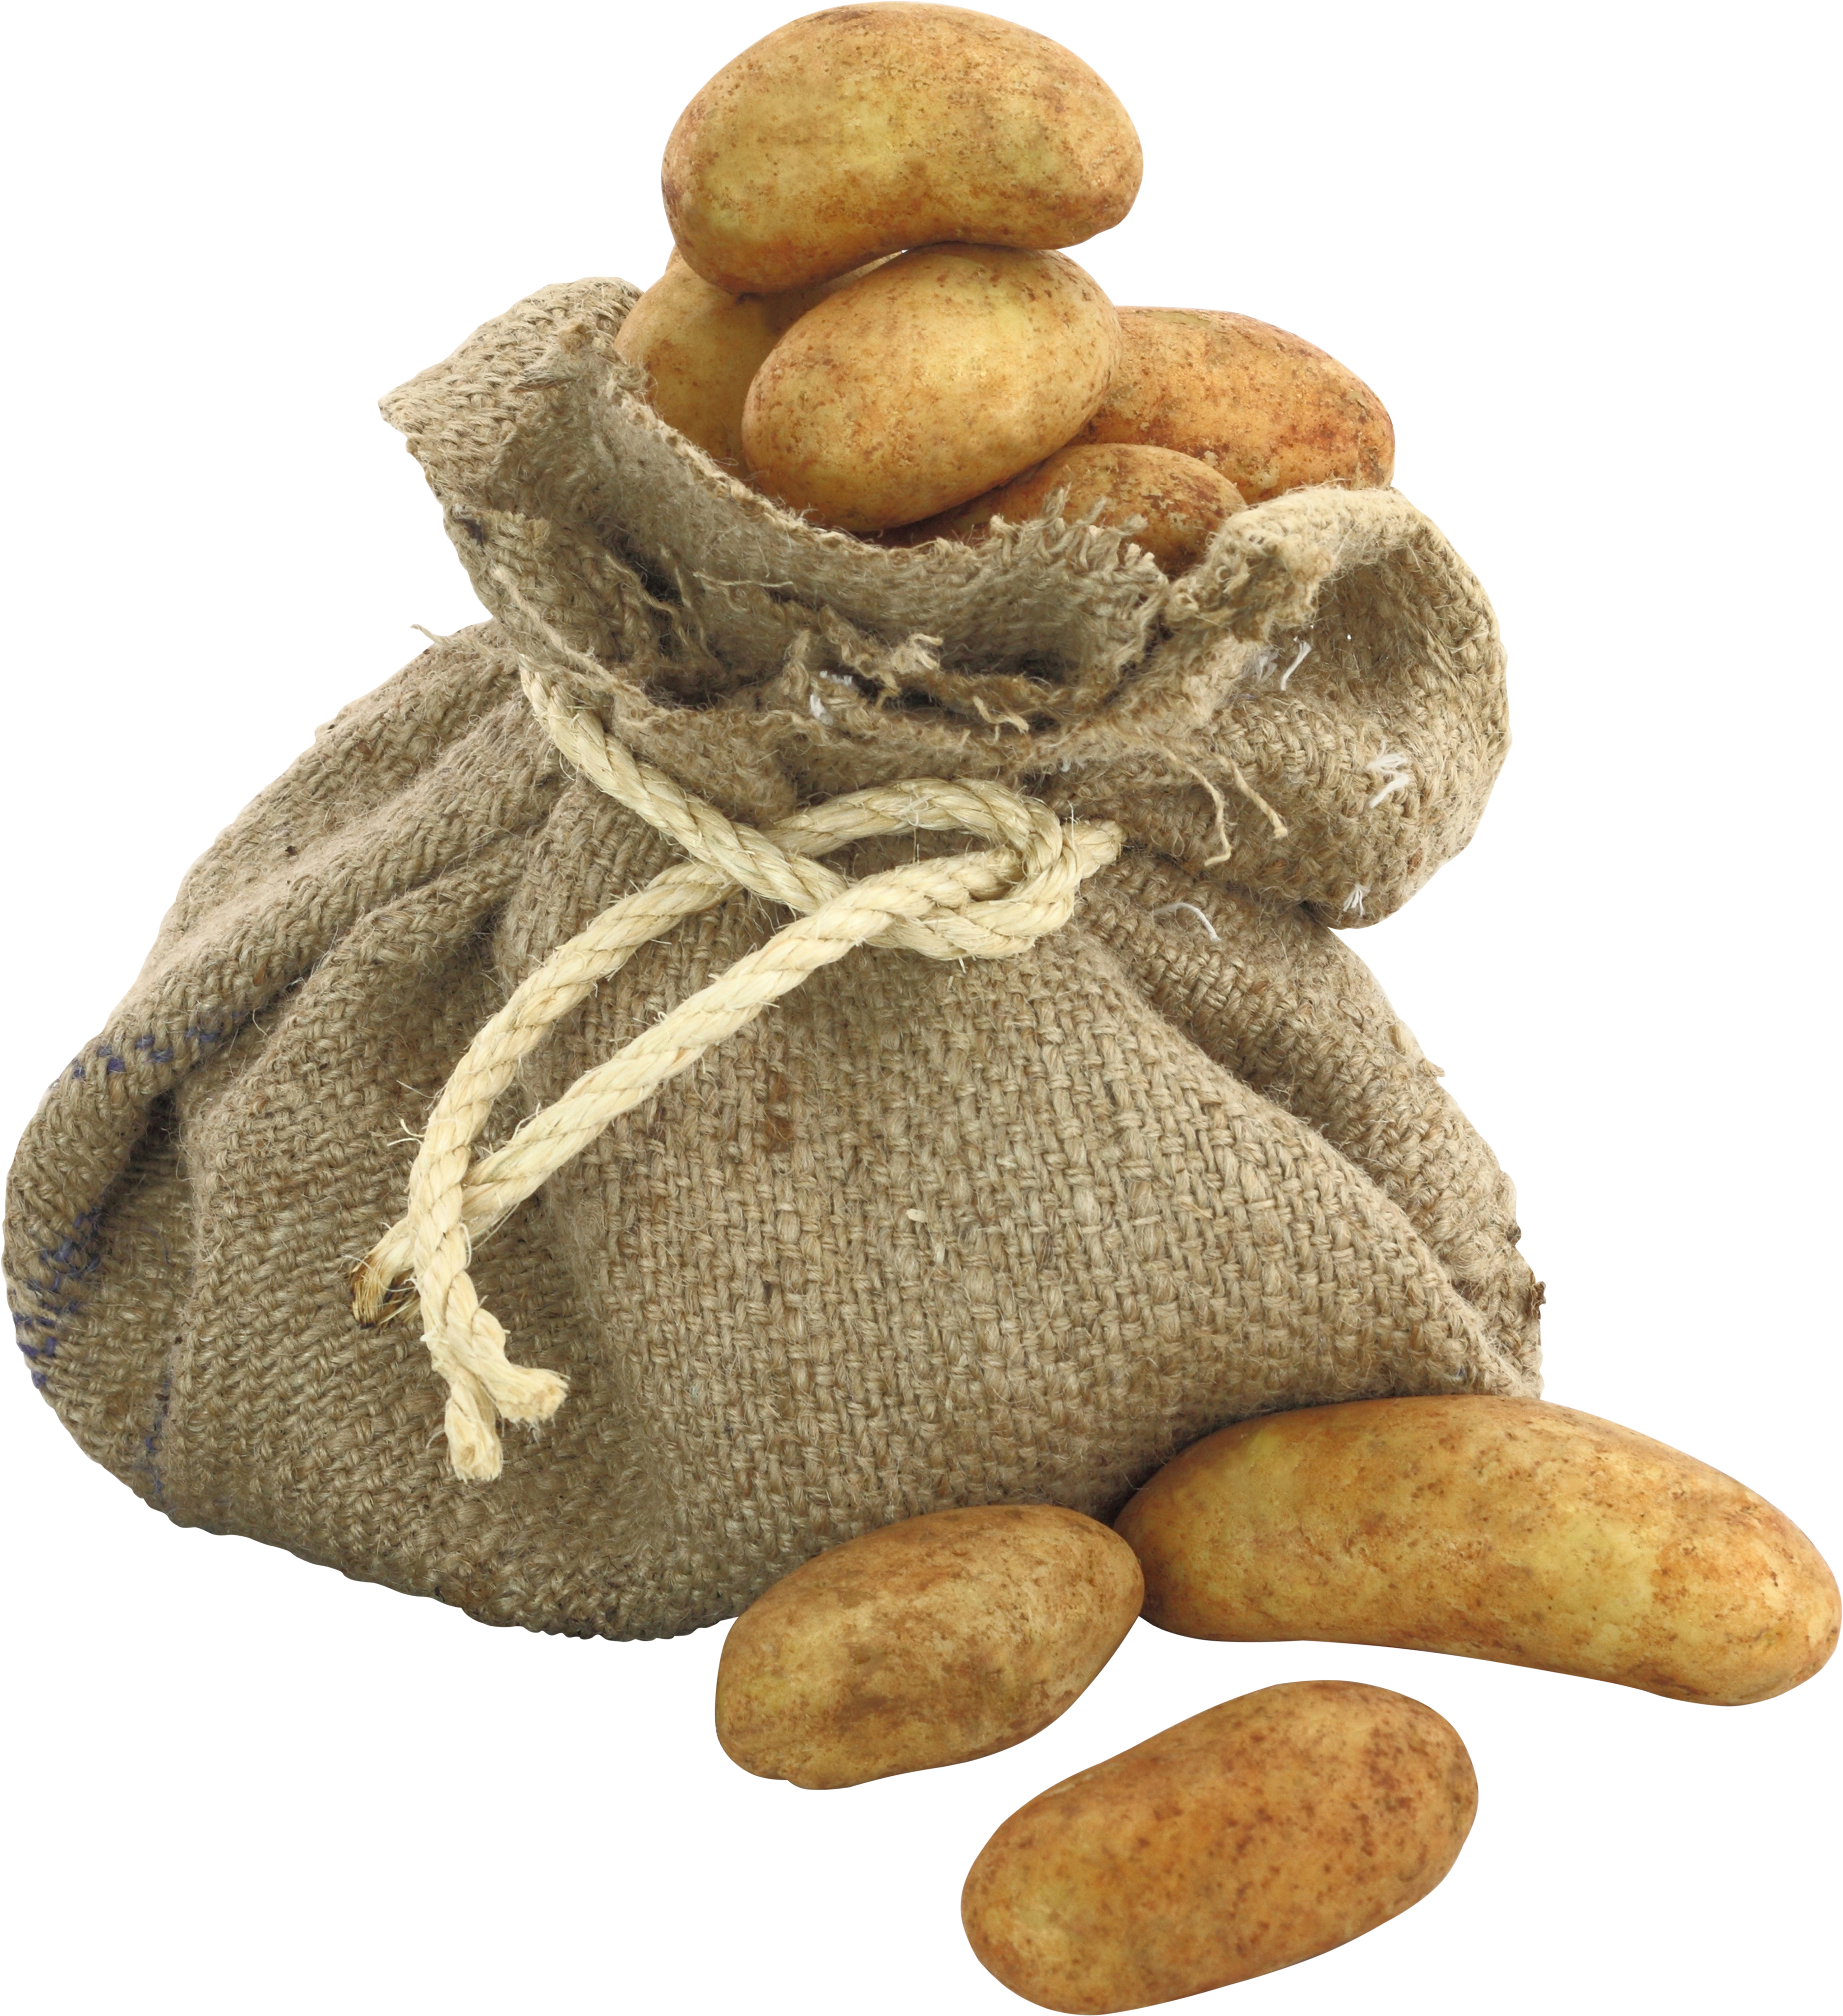 Batatas na sacola